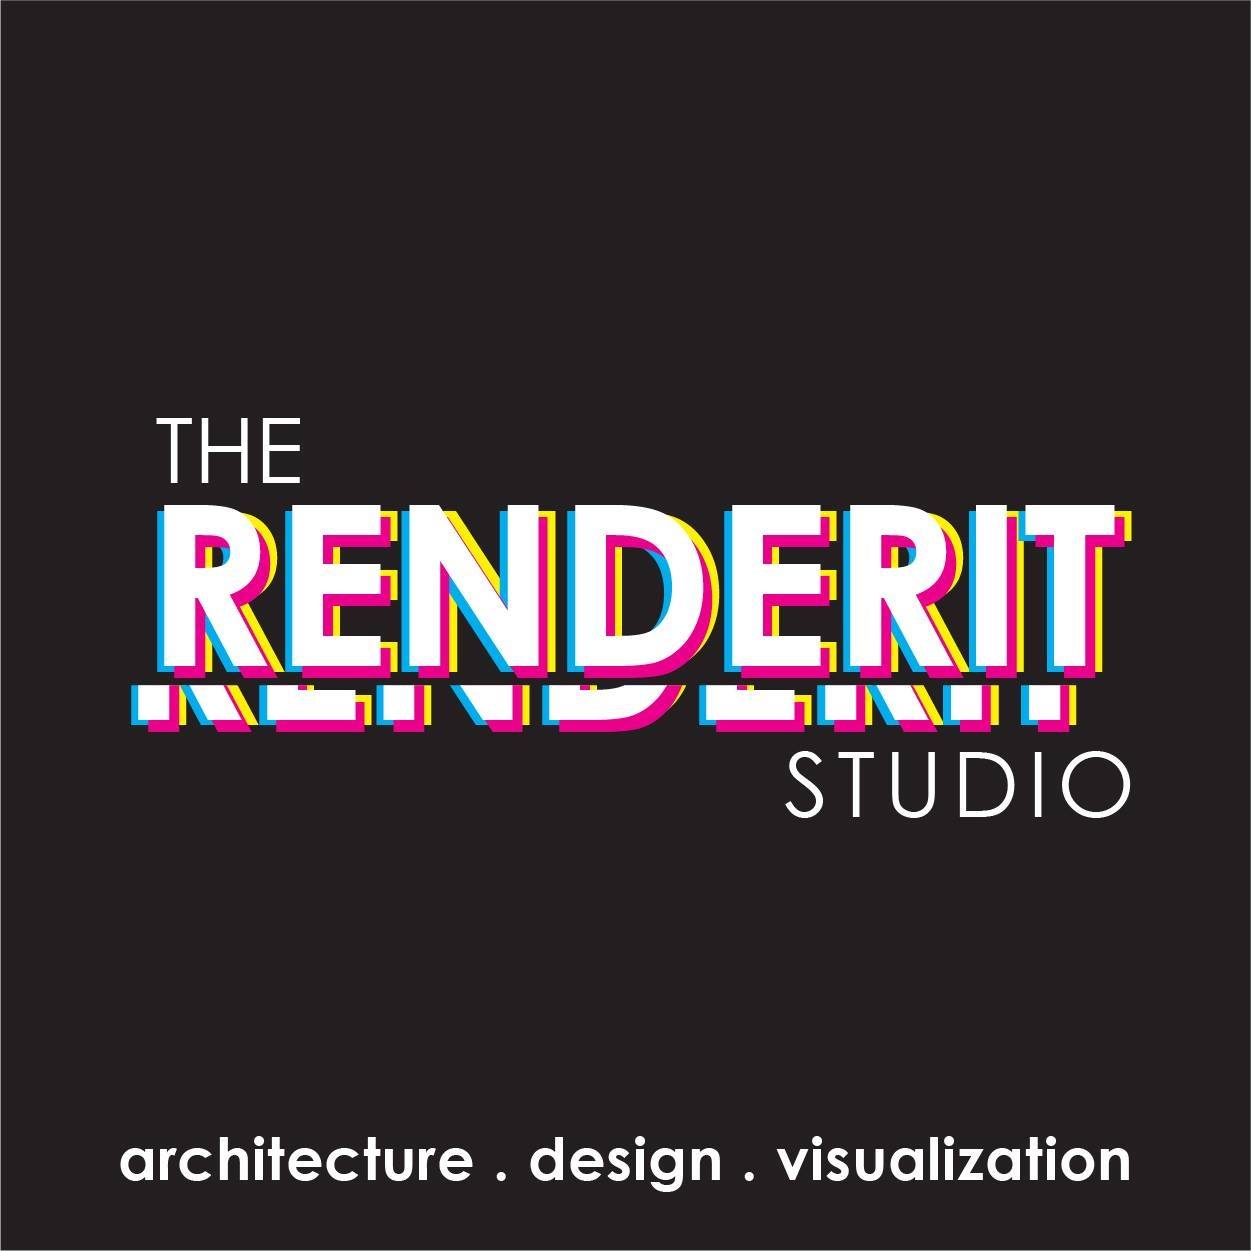 The Renderit Studio|IT Services|Professional Services